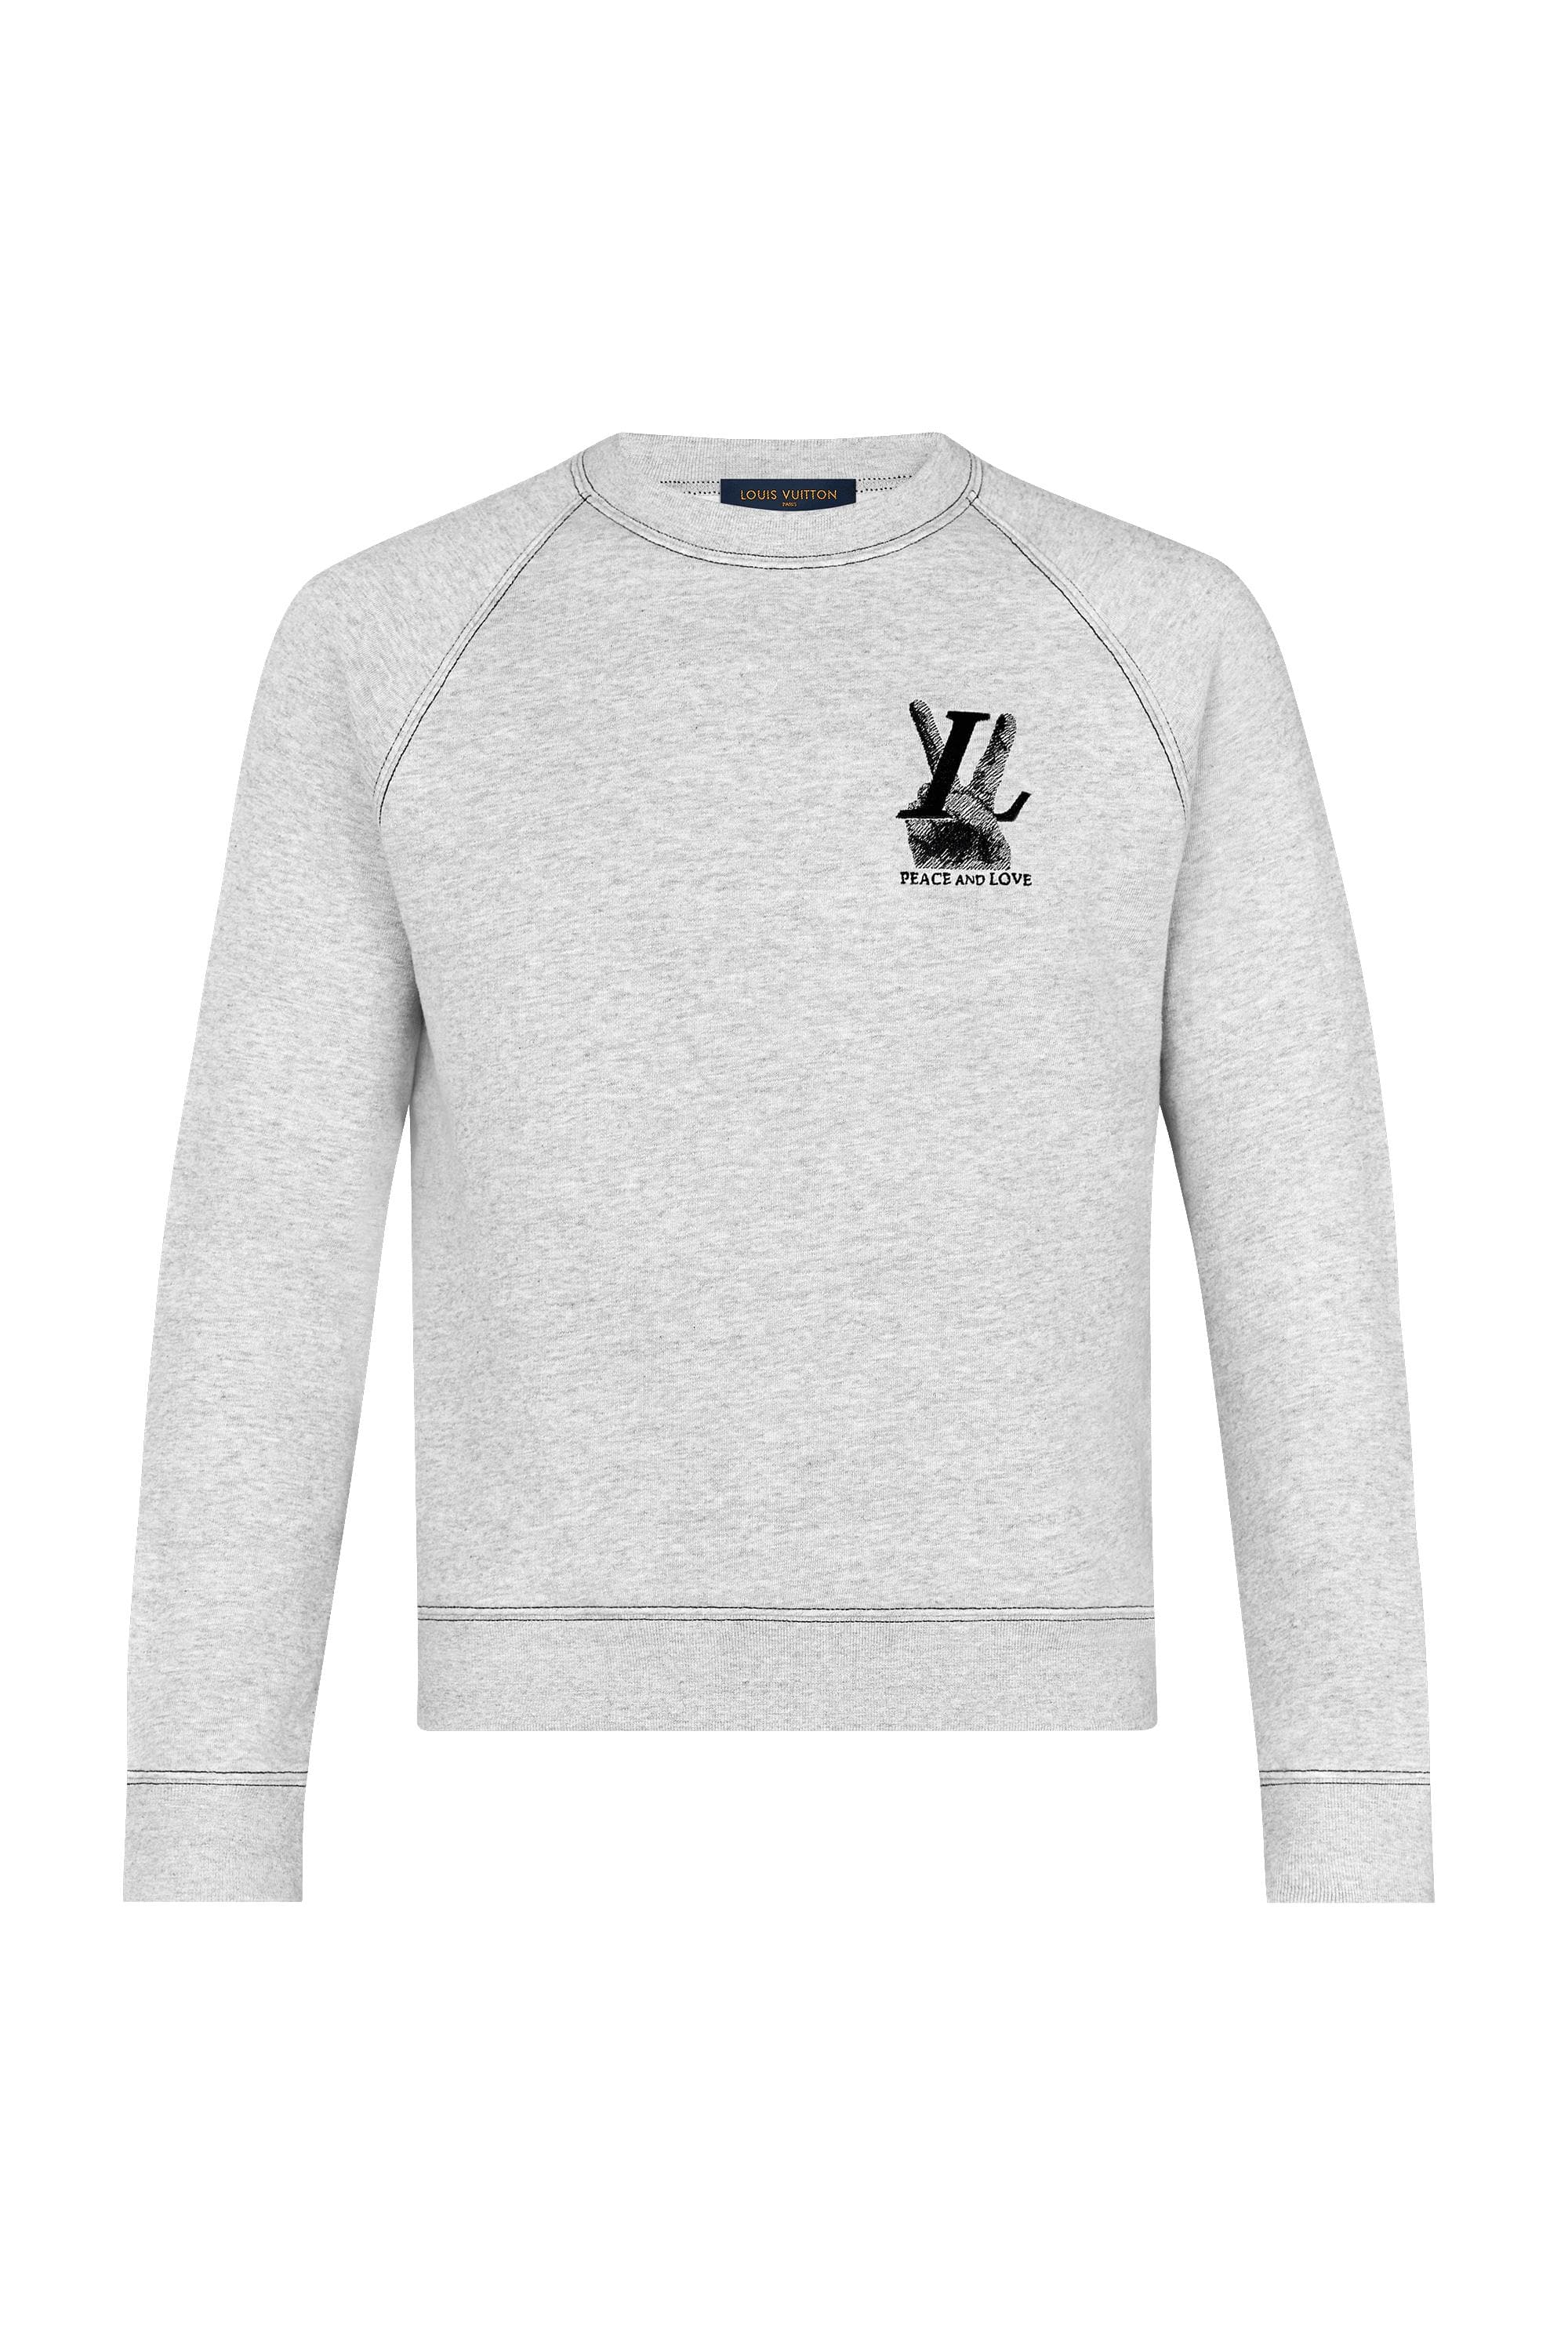 Vuitton Logo - Hand LV Logo Sweatshirt|Neon Men's Ready to Wear| LOUIS VUITTON